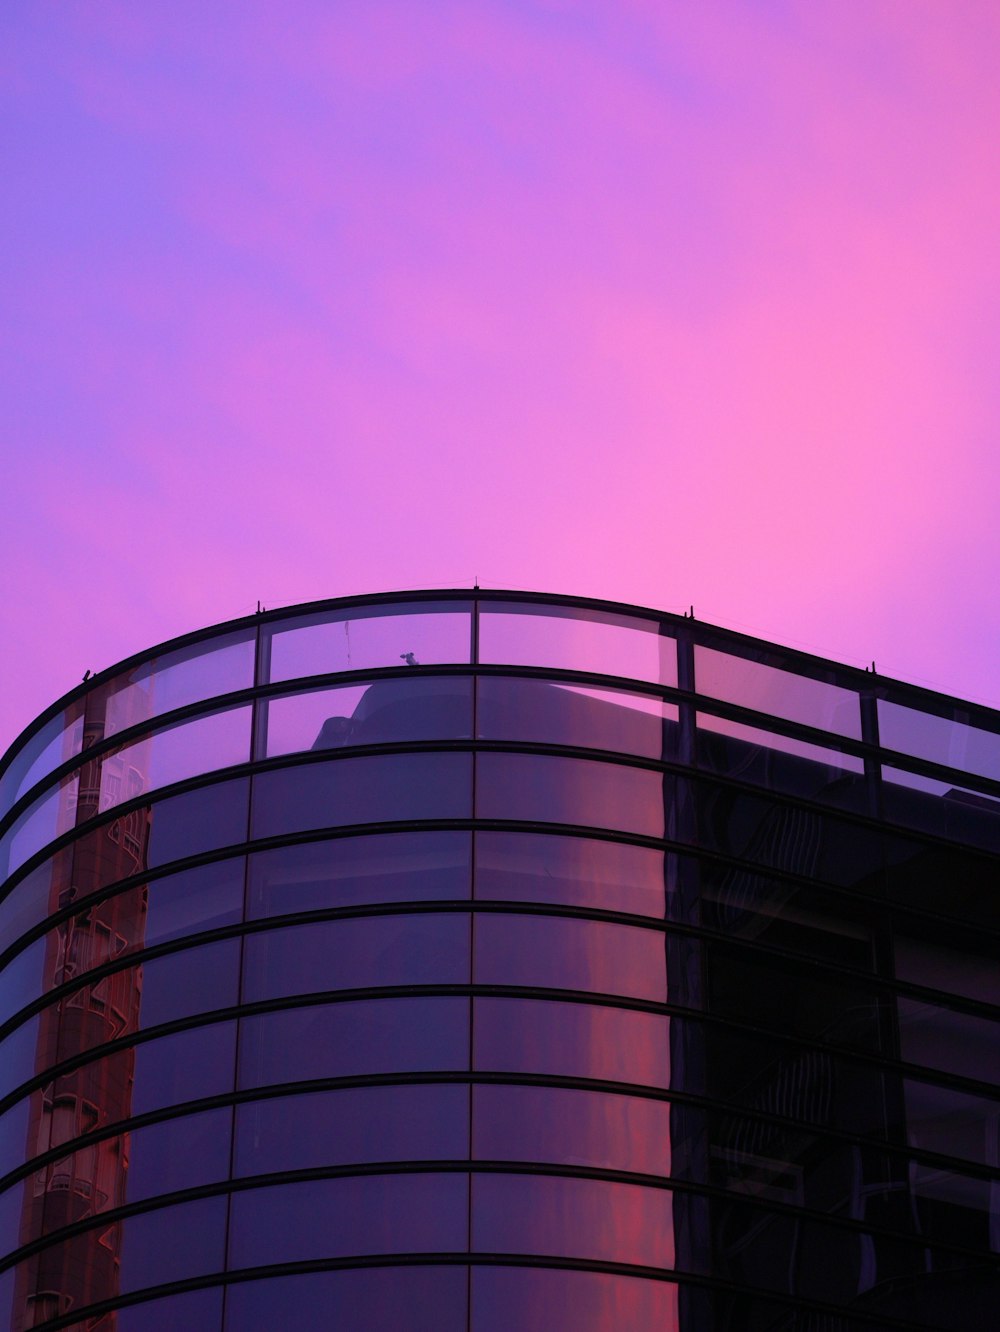 edifício de concreto cinza sob o céu rosa